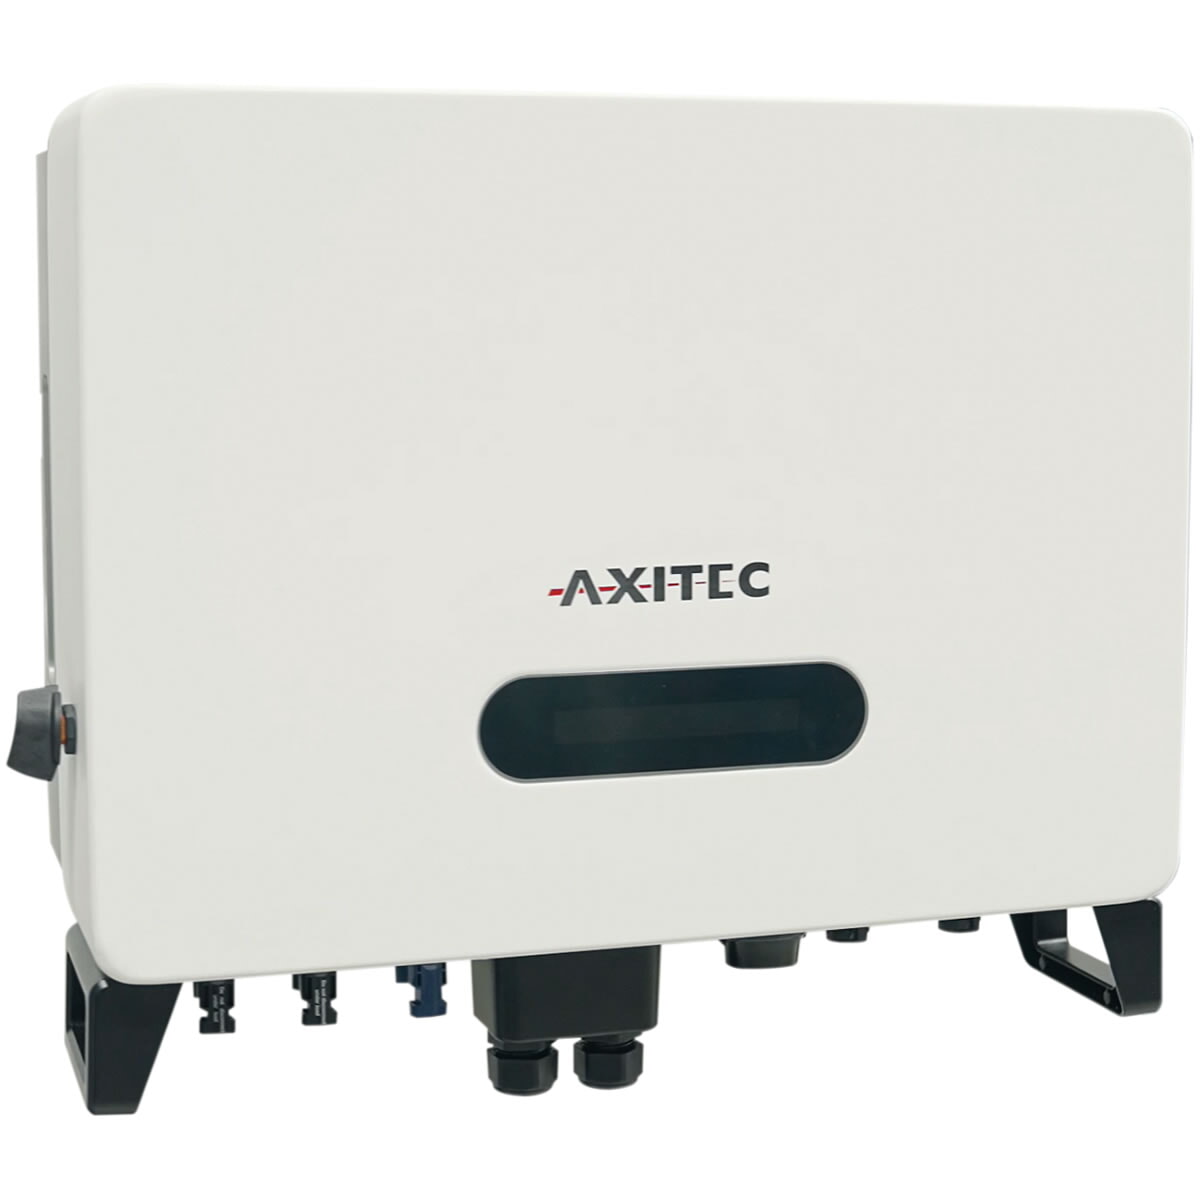 AXITEC Axihycon 8H hybrid inverter, 3-phase